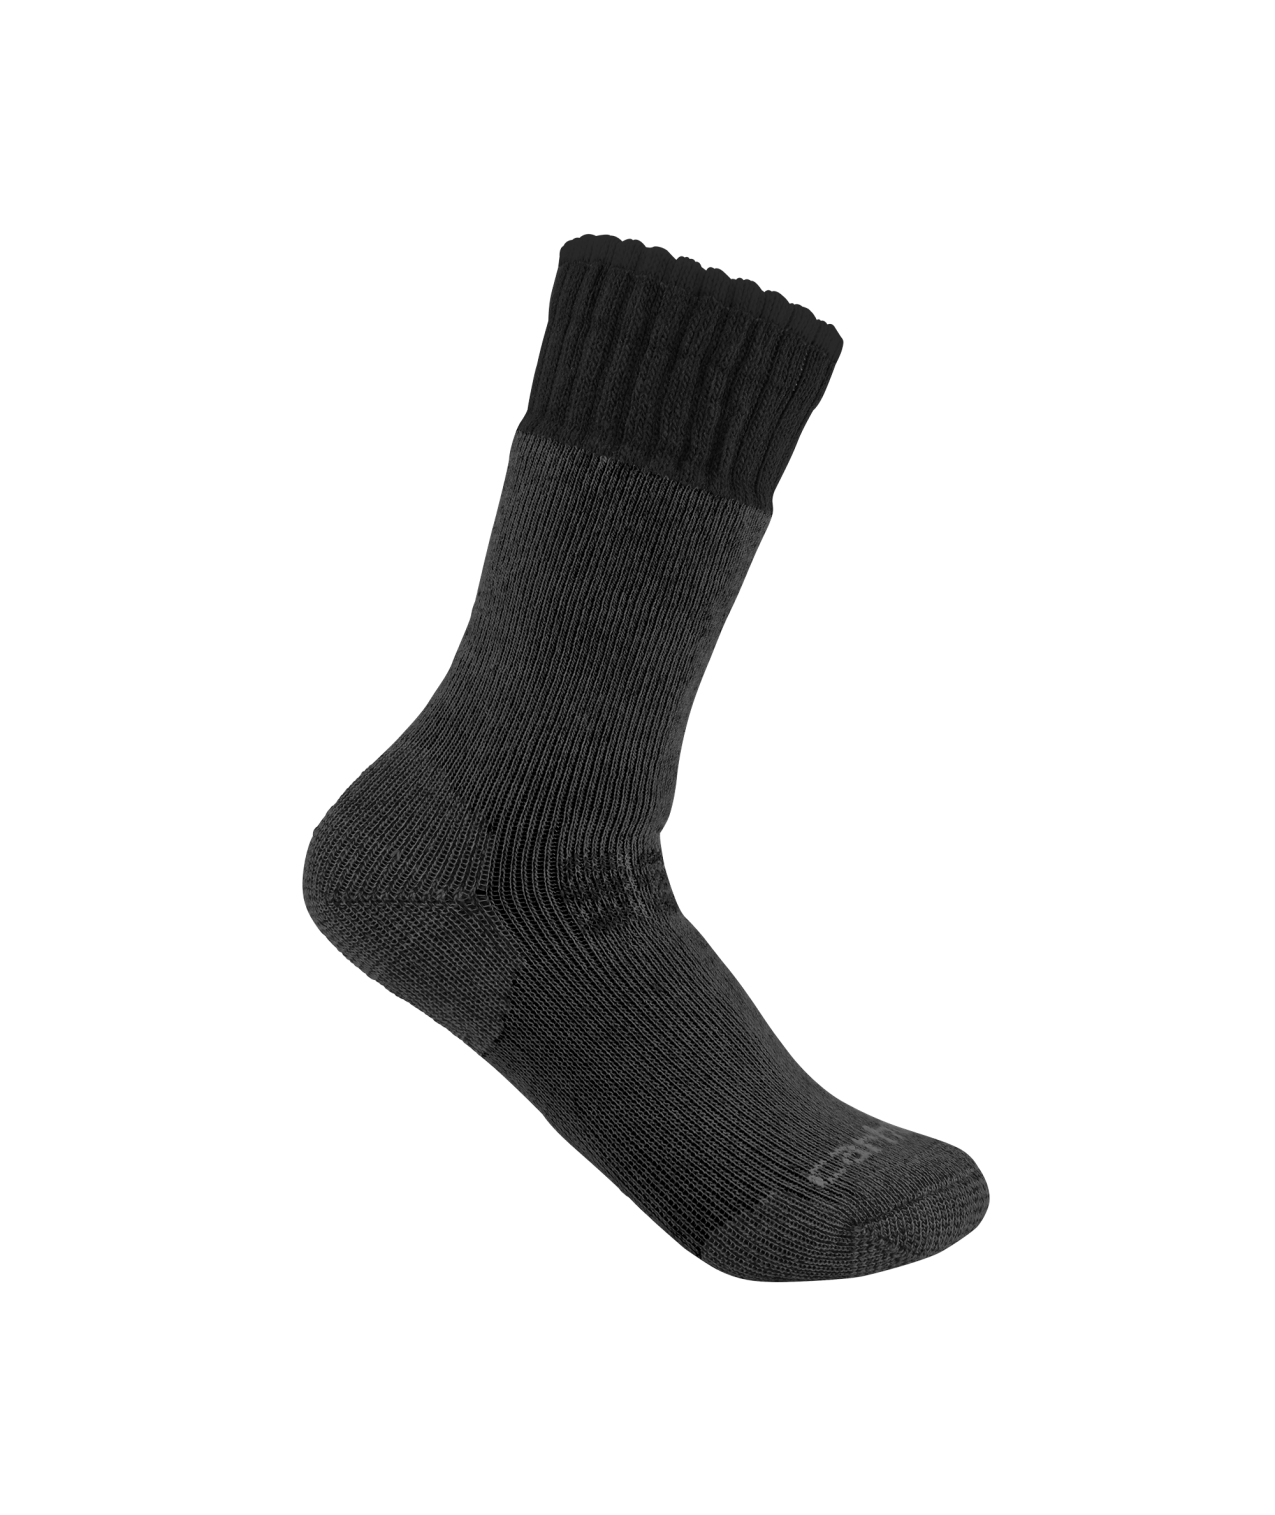 SB6600M - Carhartt Men's Heavyweight Synthetic Wool Blend Boot Sock